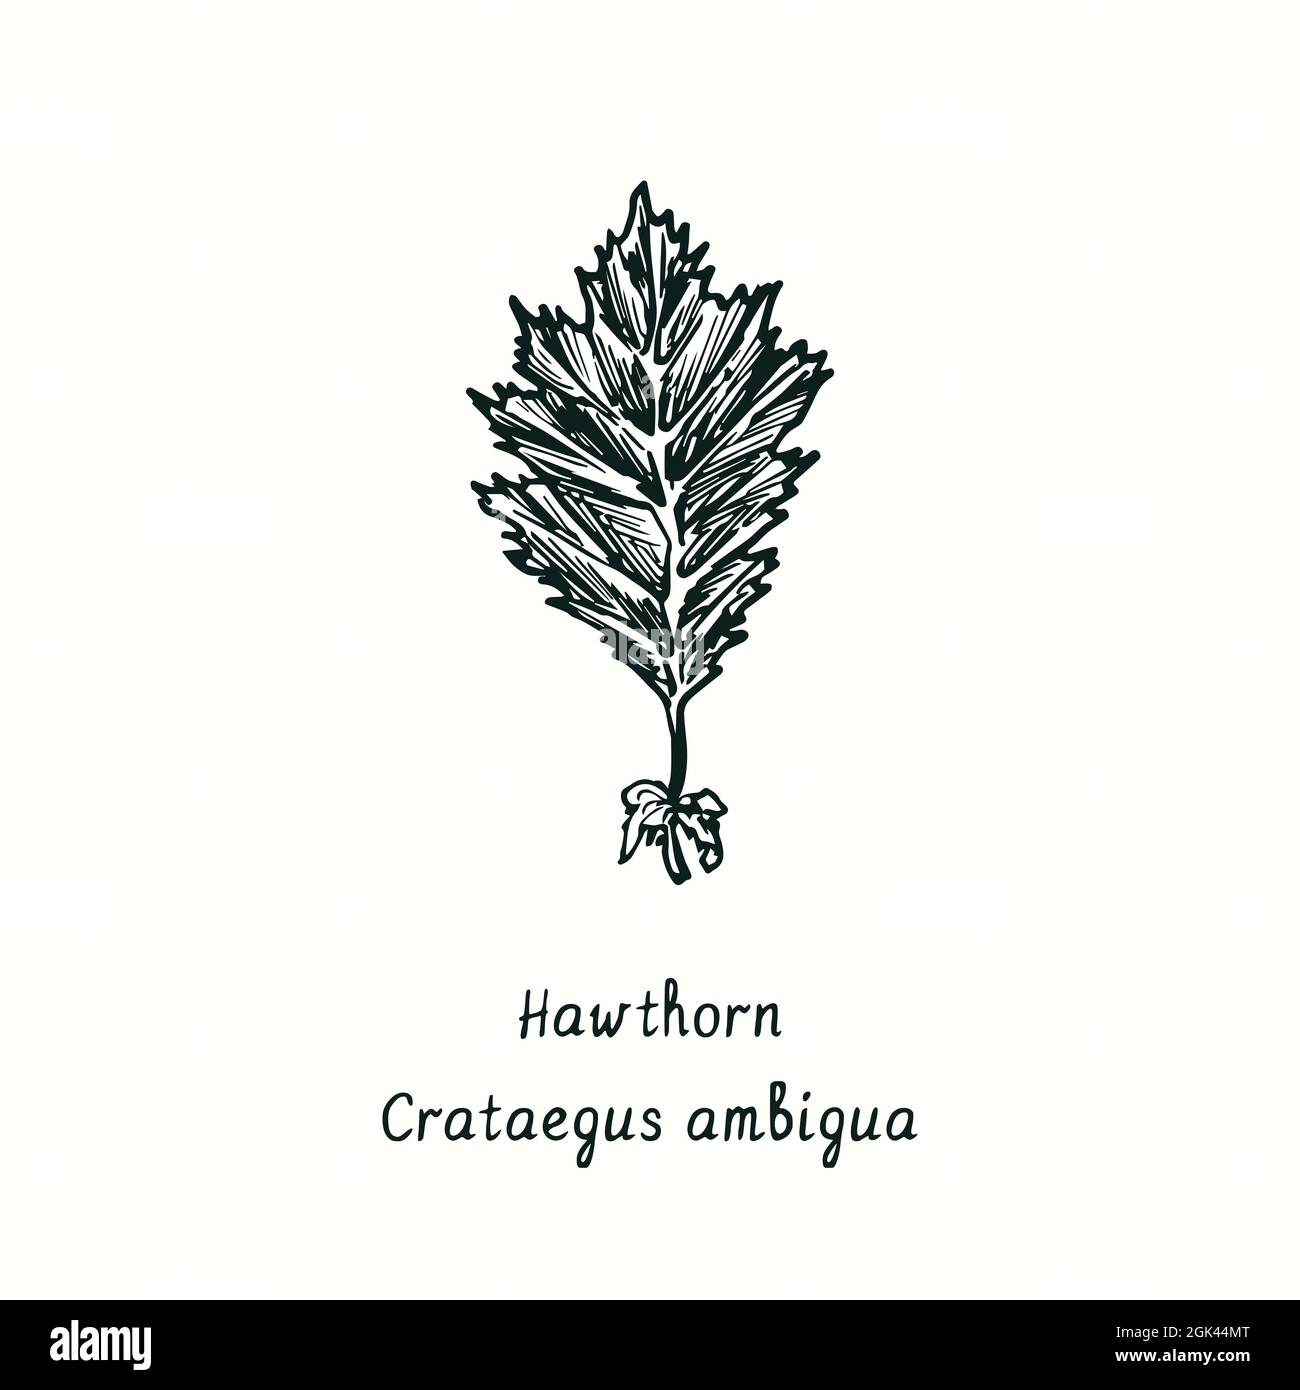 Hawthorn (Crataegus ambigua) leaf. Ink black and white doodle drawing in woodcut style. Stock Photo